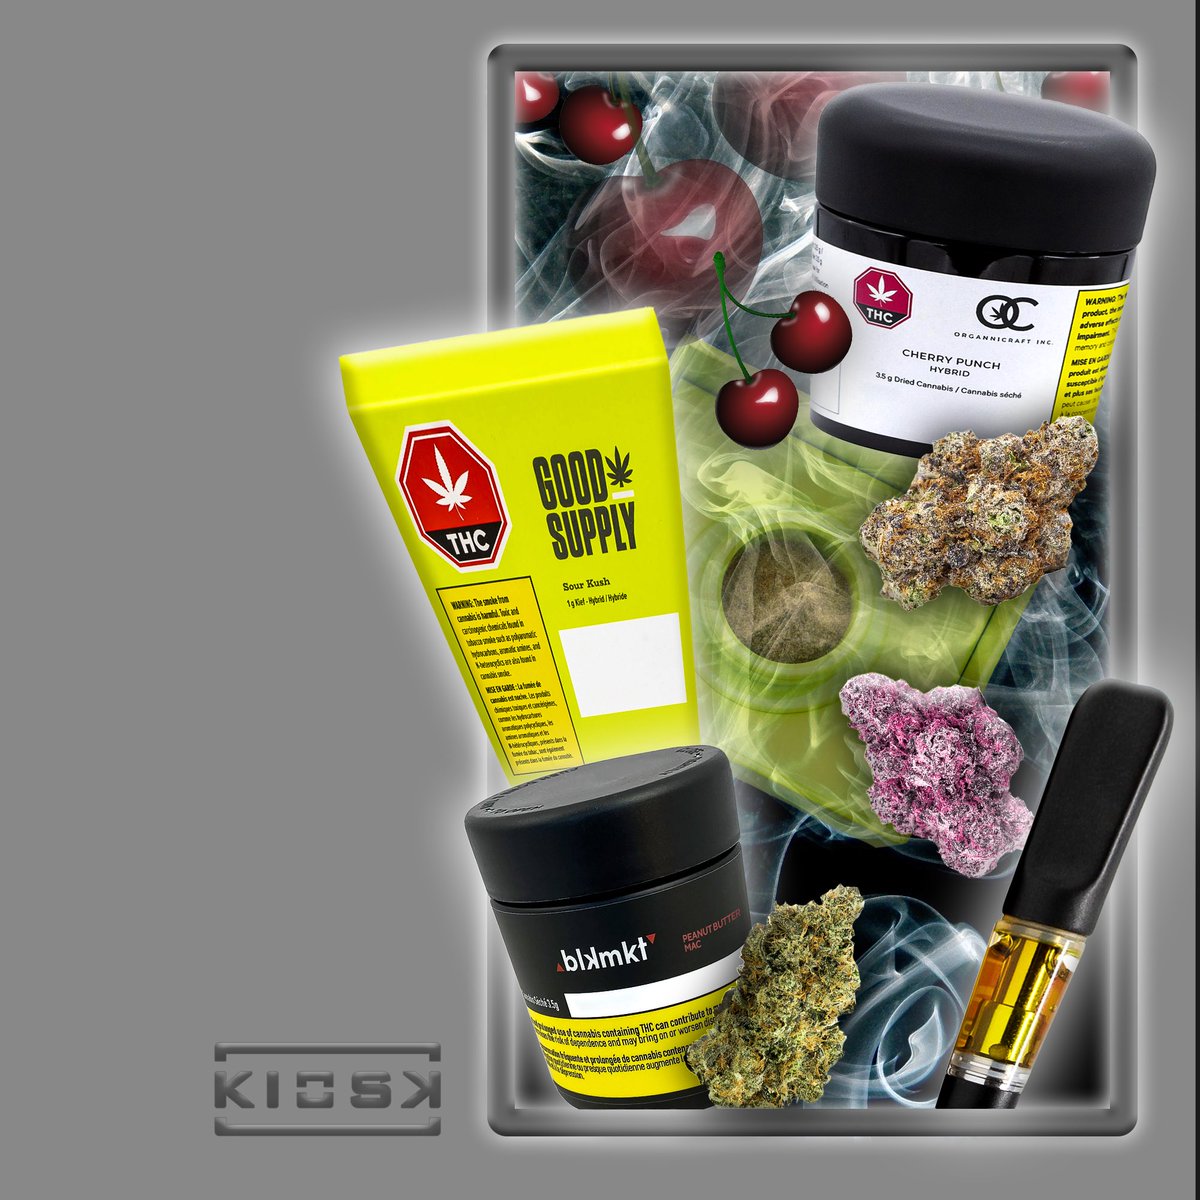 👽STAFF PICK SUNDAY👽 

This week we’re talking: 
~ Organicraft Inc. - Cherry Punch 3.5g🍒
~ Good Supply - Sour Kush Kief 1g💚
~ BLKMKT - Peanut Butter Mac 3.5g 🥜
~ Wayfarer - Pink Kush 510 Thread Cartridge .47g💗

Link in bio🤍 
#staffpicks #toronto #kioskcannabis #kief #flower